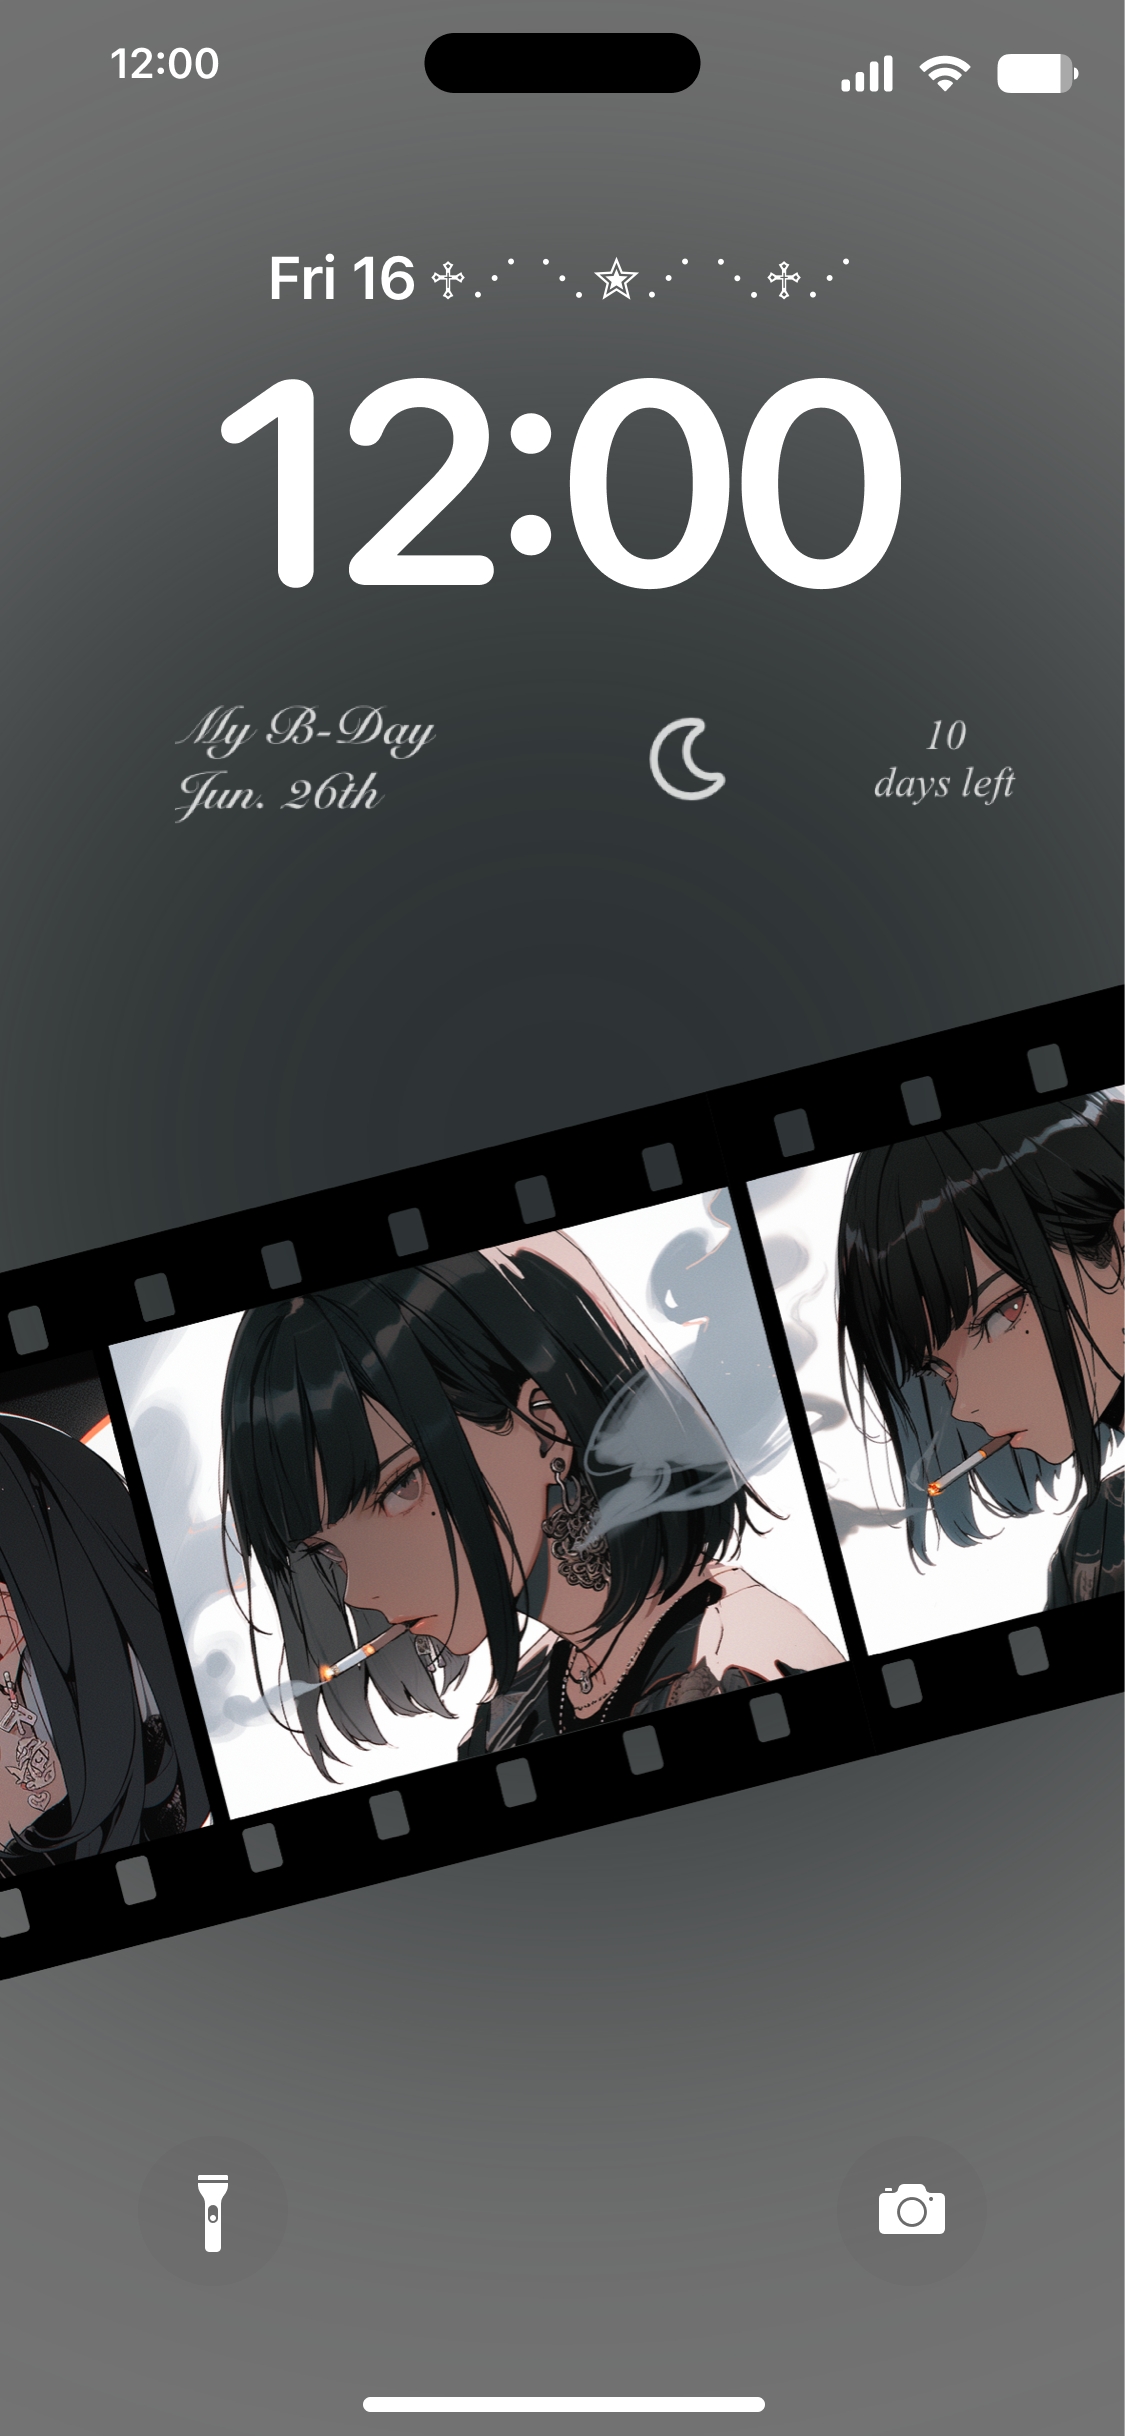 Kazabana Fuuka Anime Wallpaper for iPhone 11